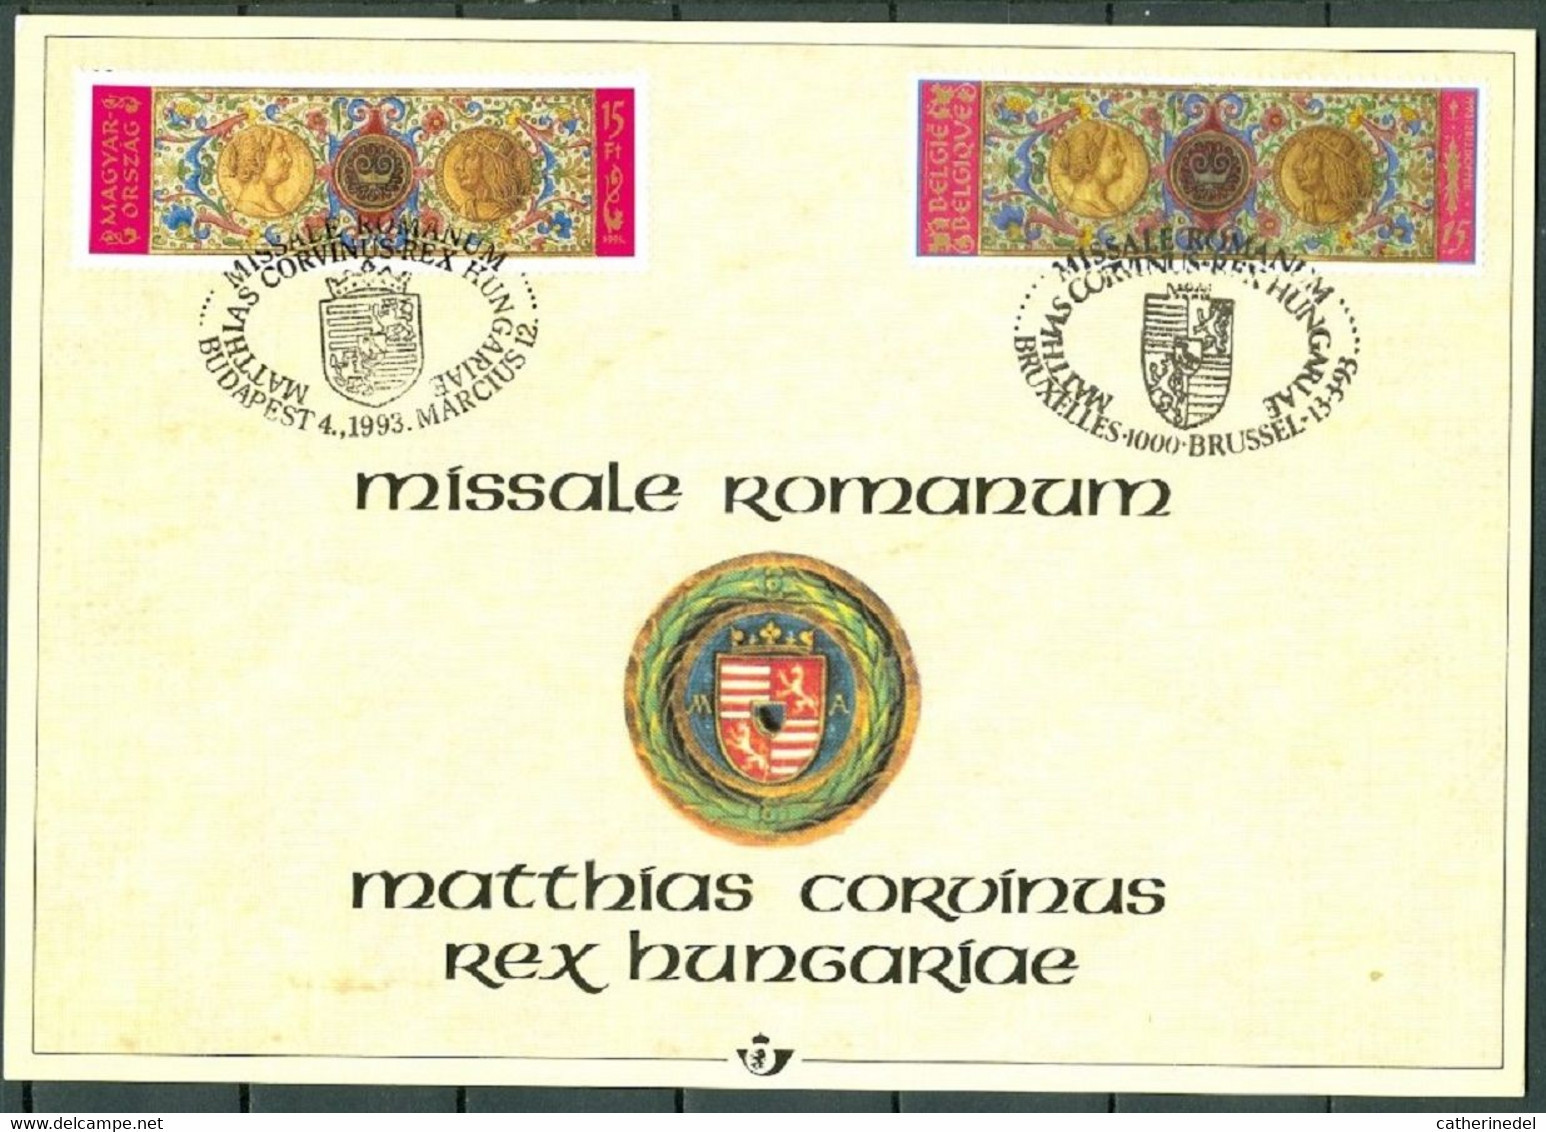 Année 1993 : Carte Souvenir 2492HK - Histoire - Missale Romanum - Herdenkingskaarten - Gezamelijke Uitgaven [HK]